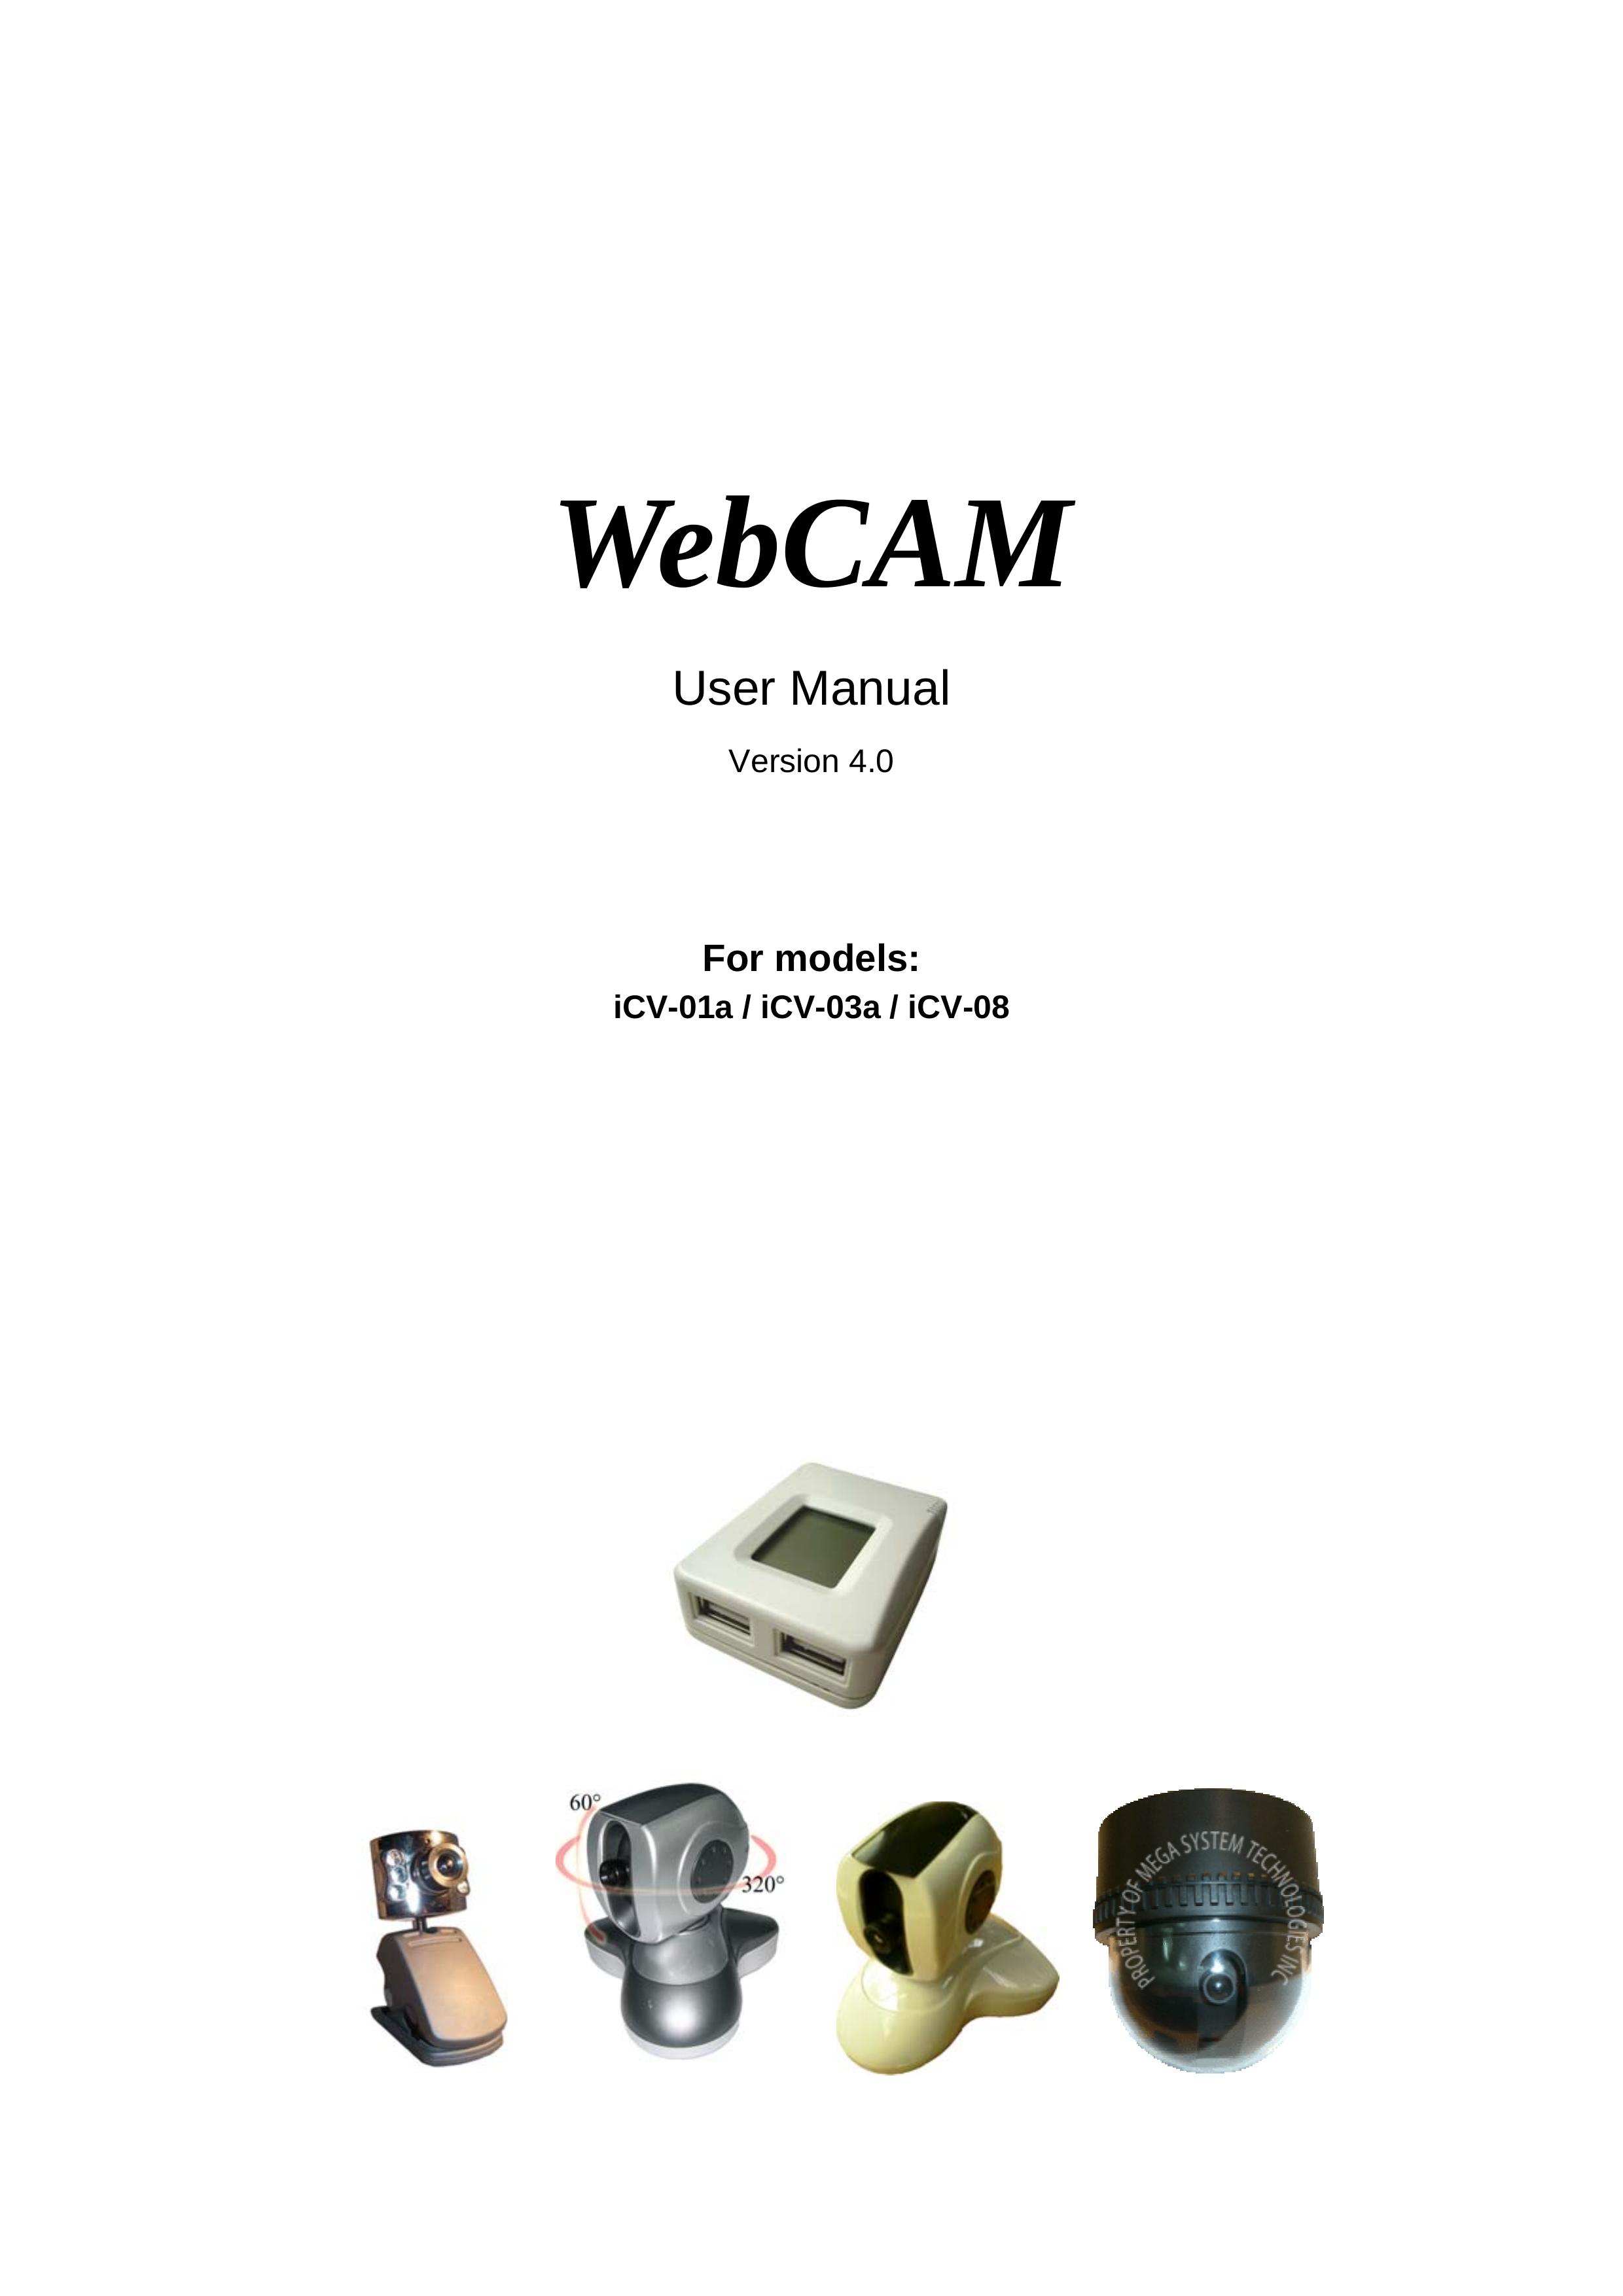 3Com iCV-01a Digital Camera User Manual